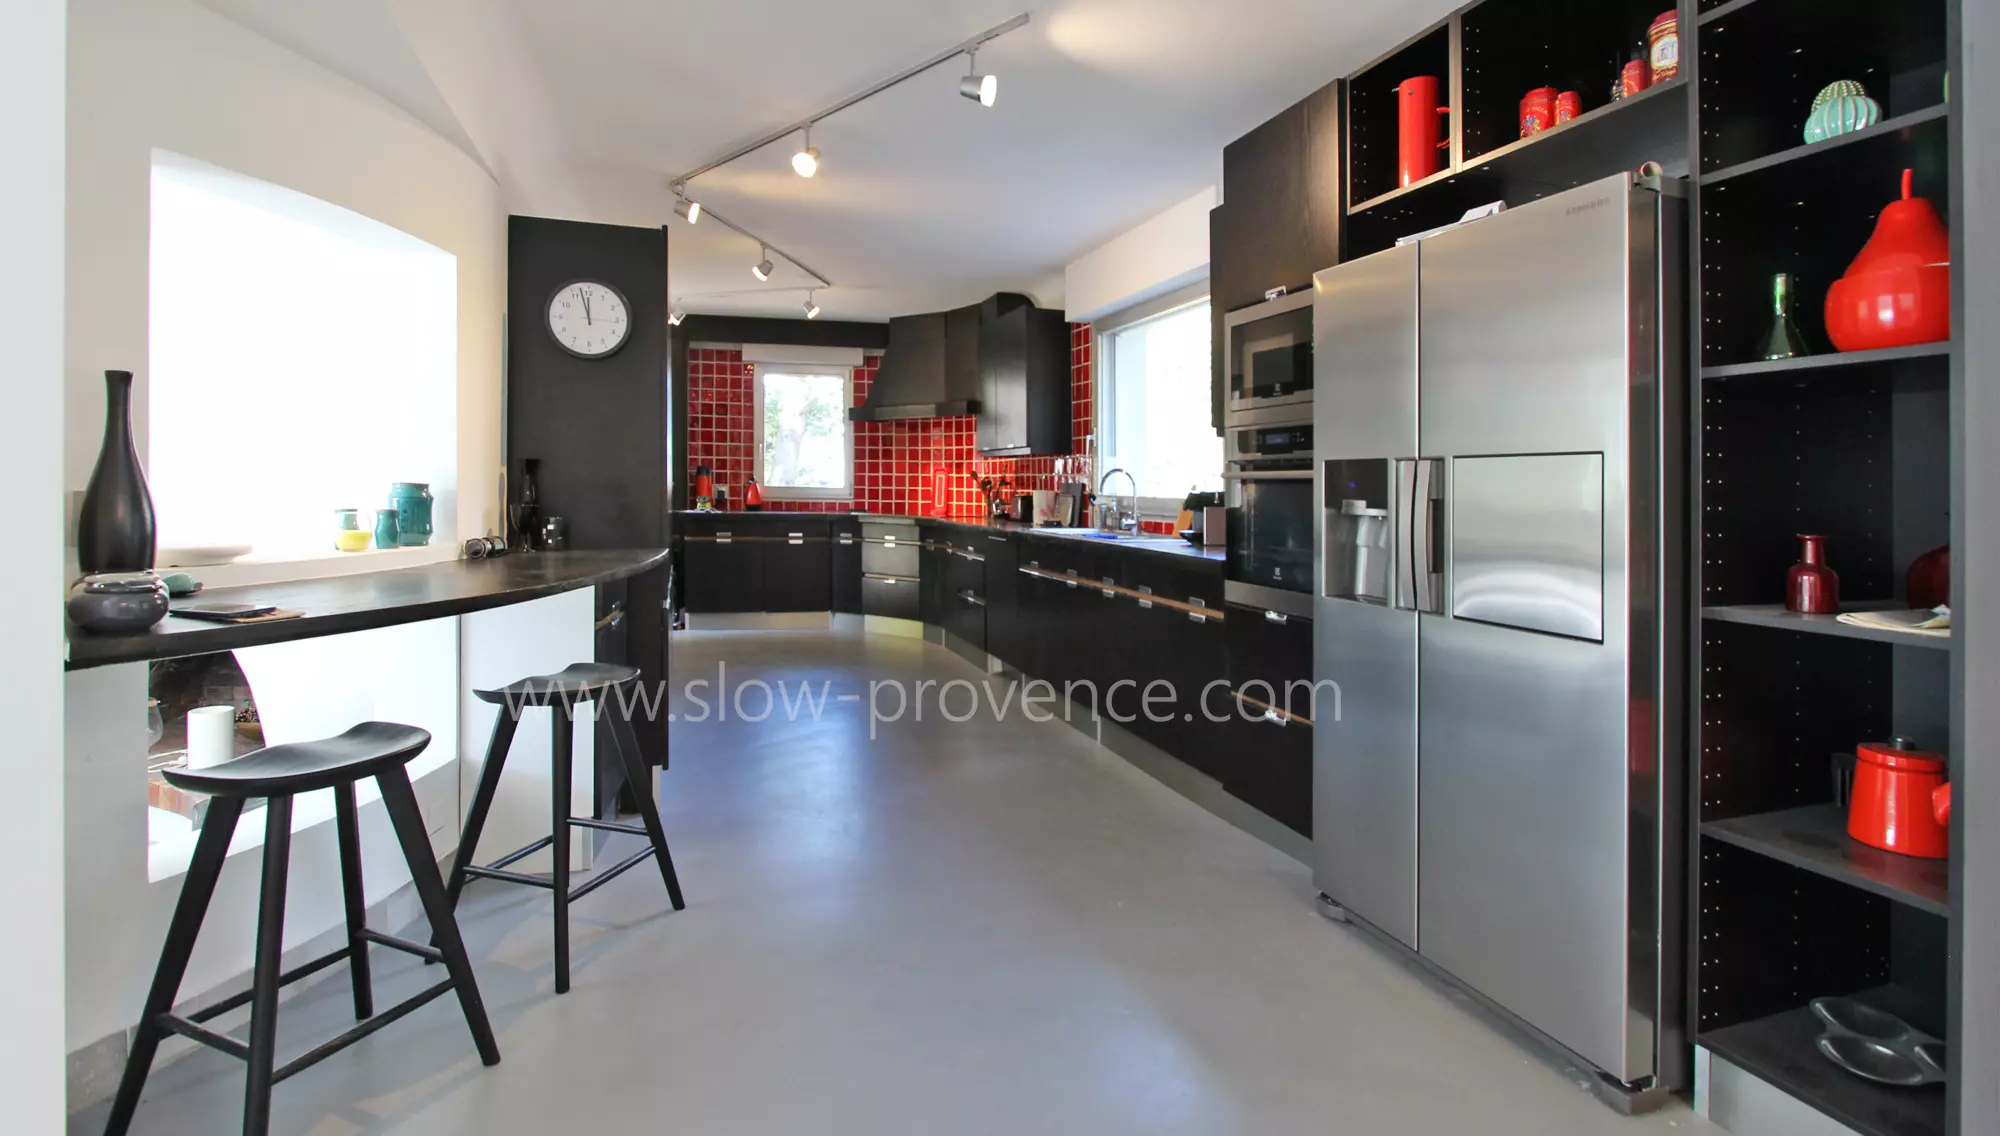 Large fully furnished kitchen